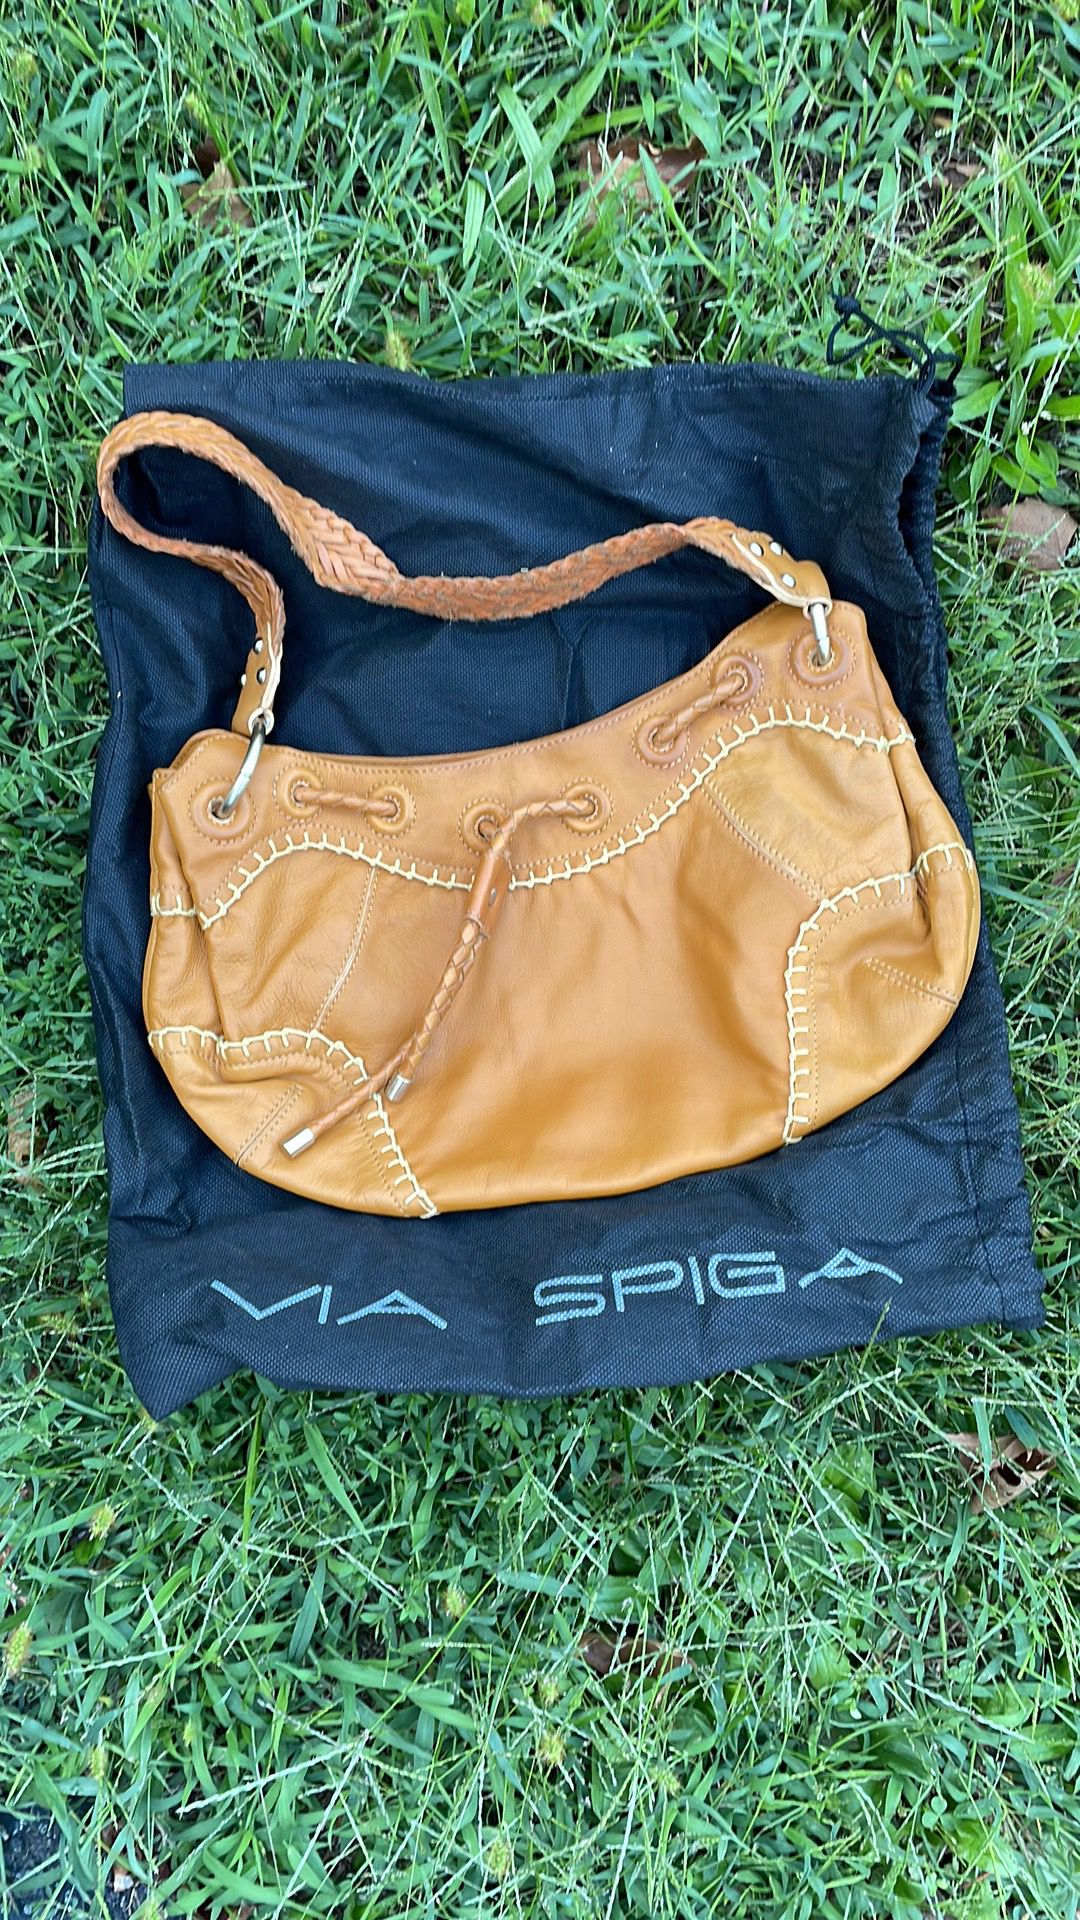 Women’s leather VIA SPIGA Handbag